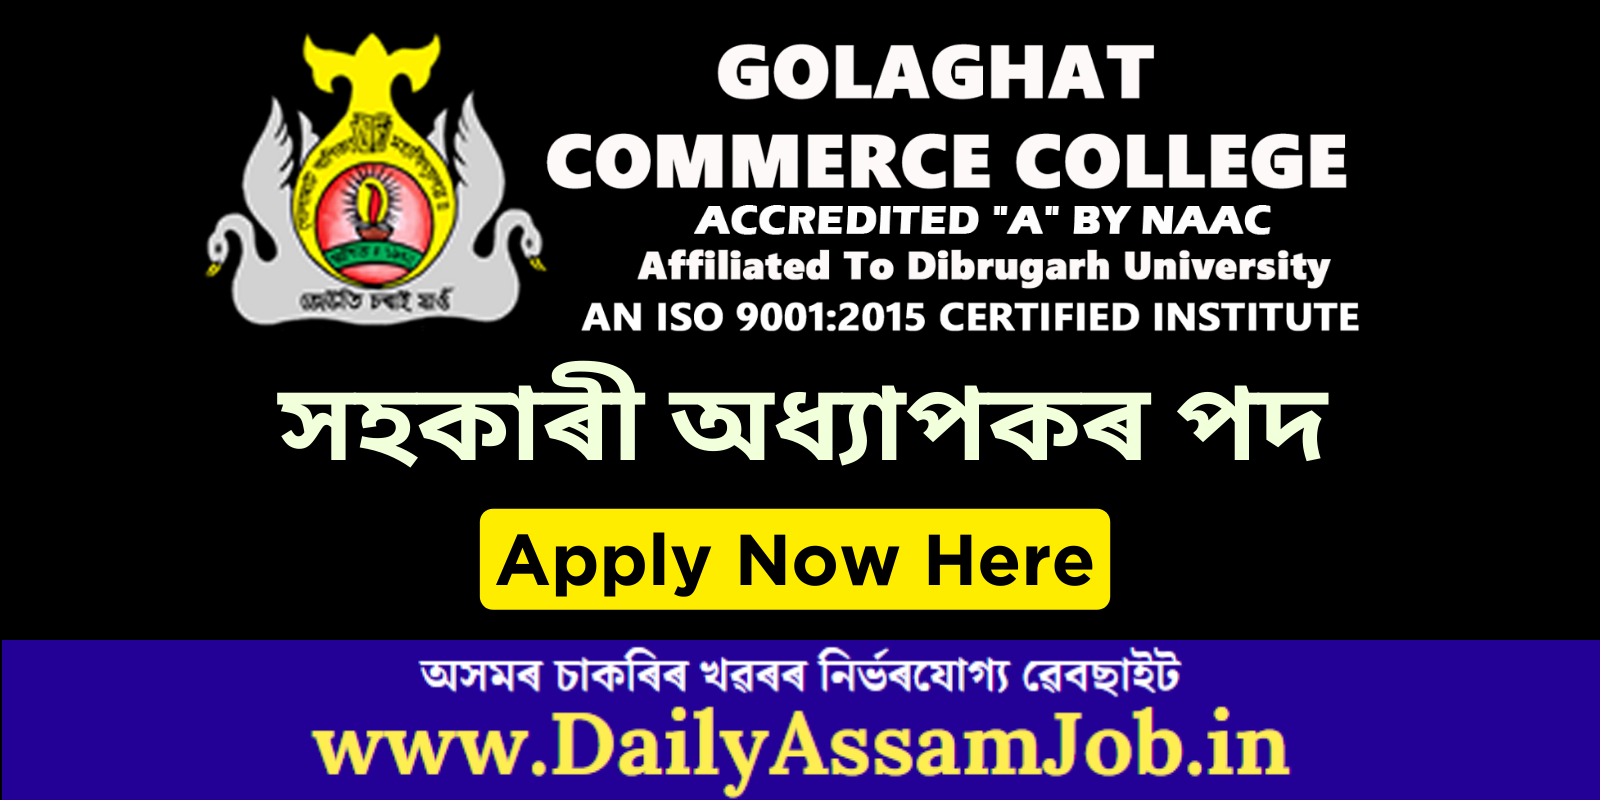 Assam Career :: Golaghat Commerce College Recruitment for Assistant Professor Vacancy